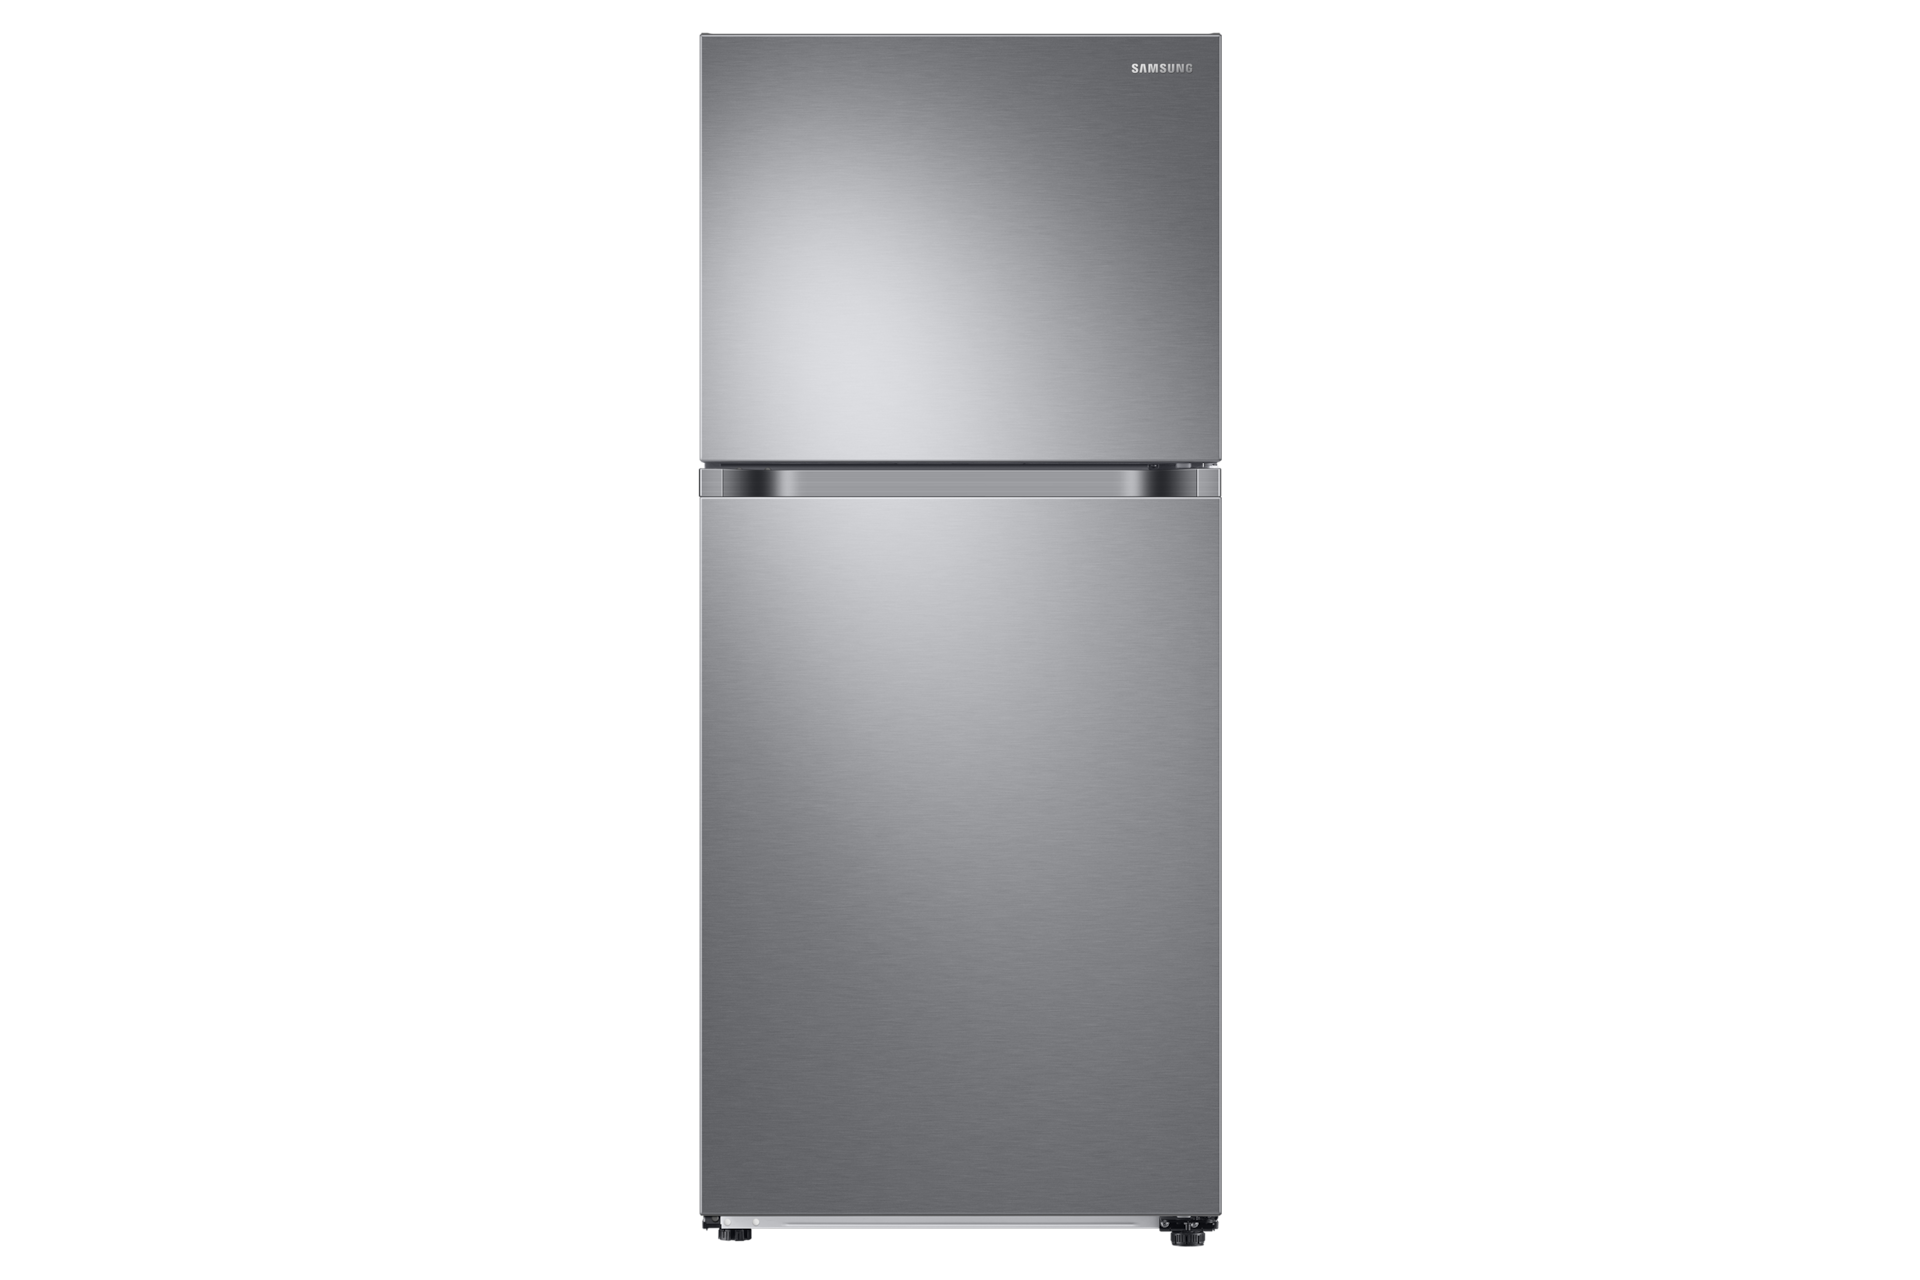 Samsung RT21M6213SR top freezer refrigerator review: Simple, yet stylish -  CNET